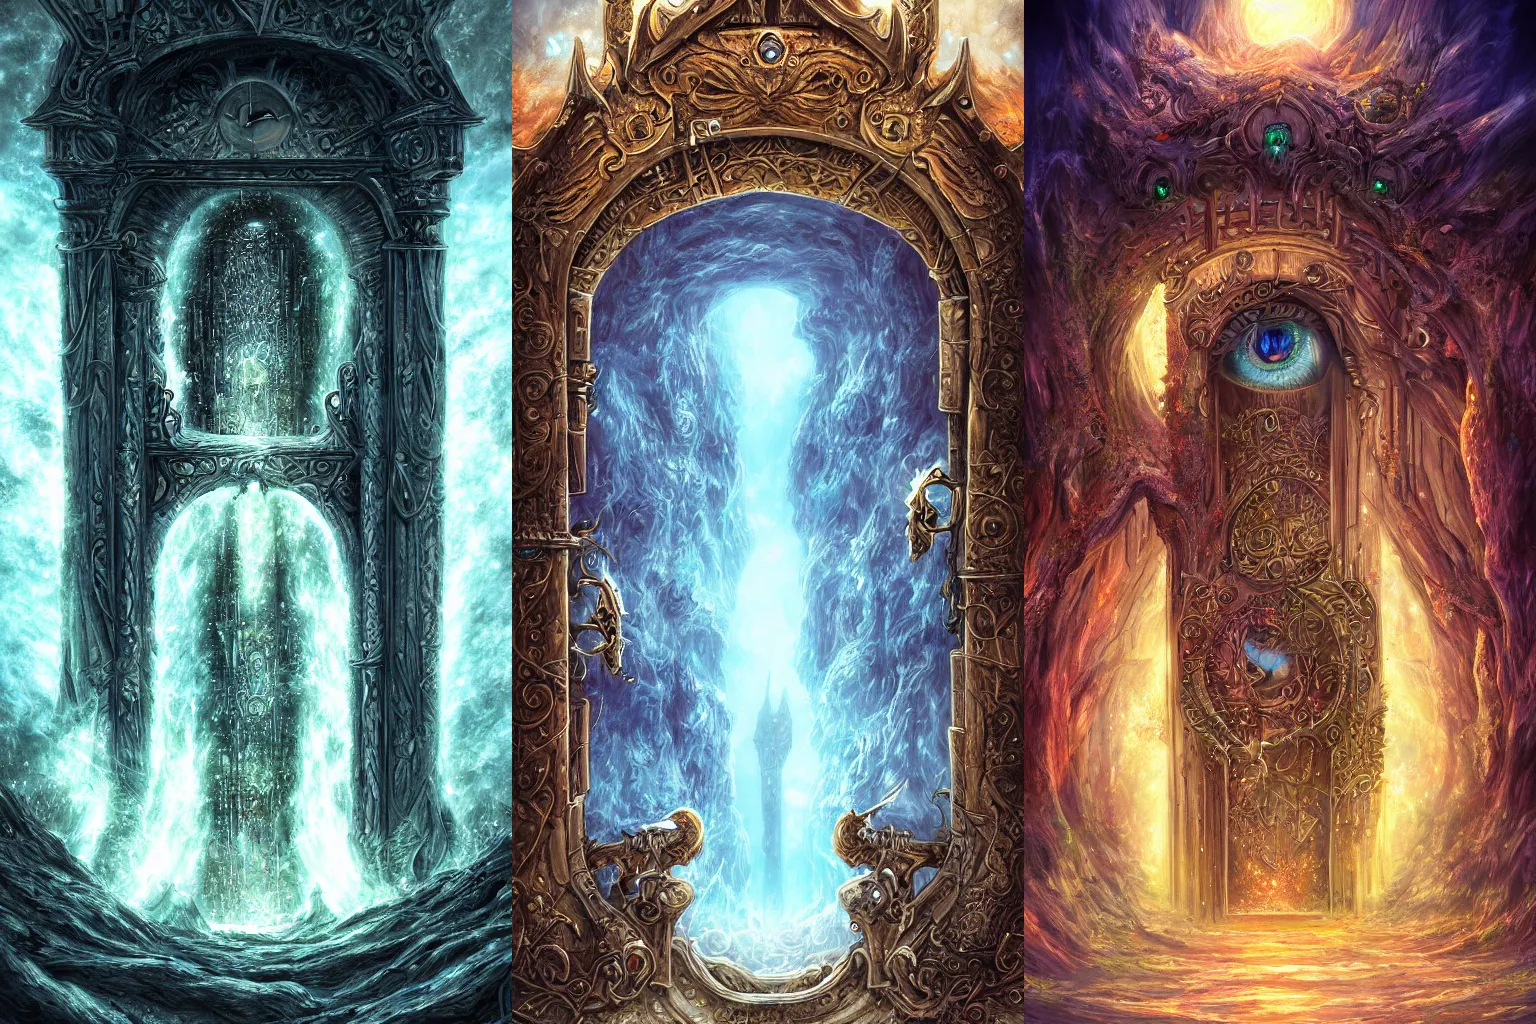 Prompt: The gate to the eternal kingdom of eyes eyes eyes, fantasy, digital art, HD, detailed.